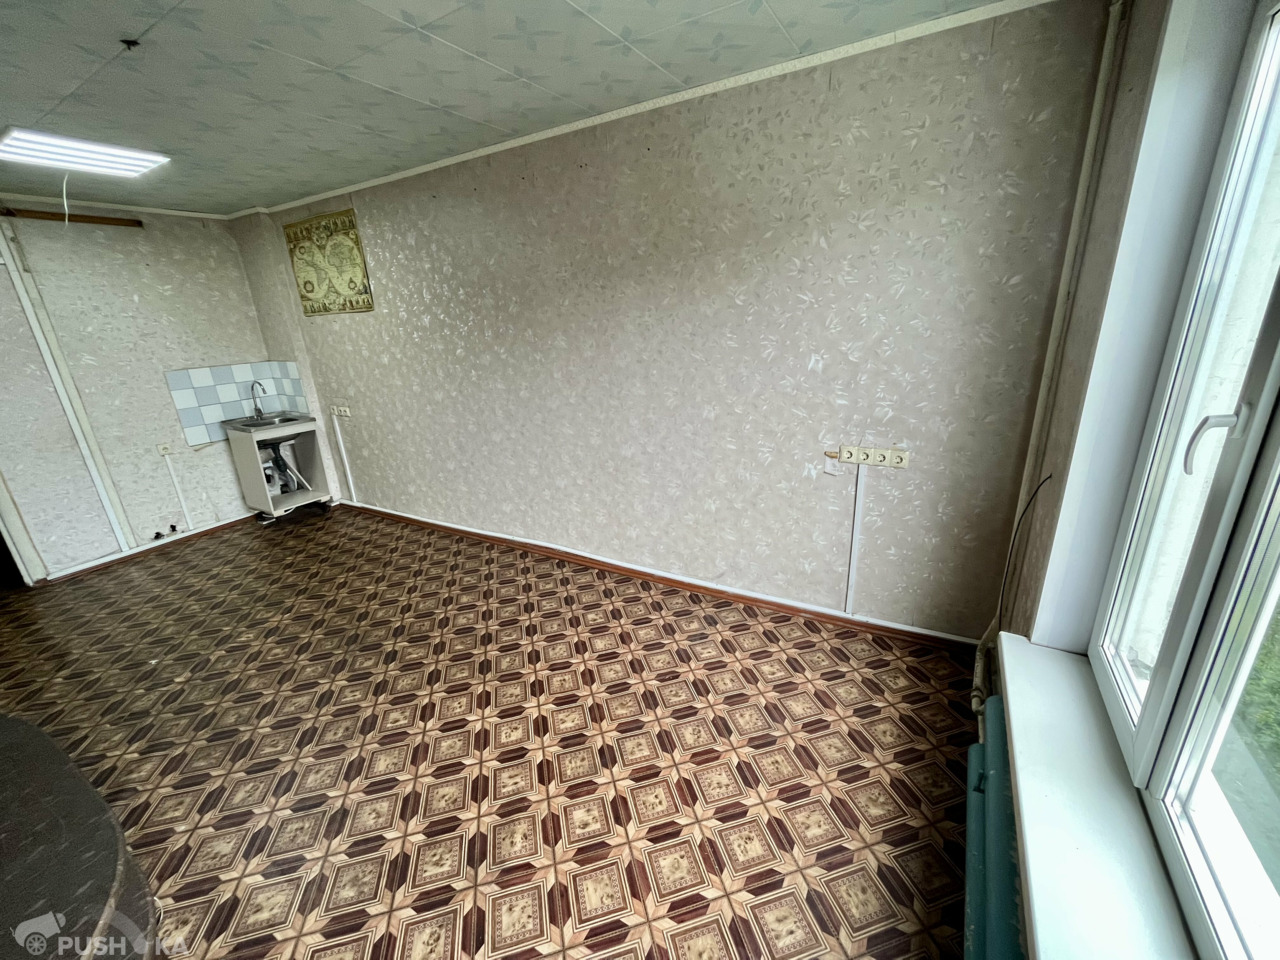 Продаётся 1-комнатная квартира 23.0 кв.м. этаж 2/9 за 1 550 000 руб 